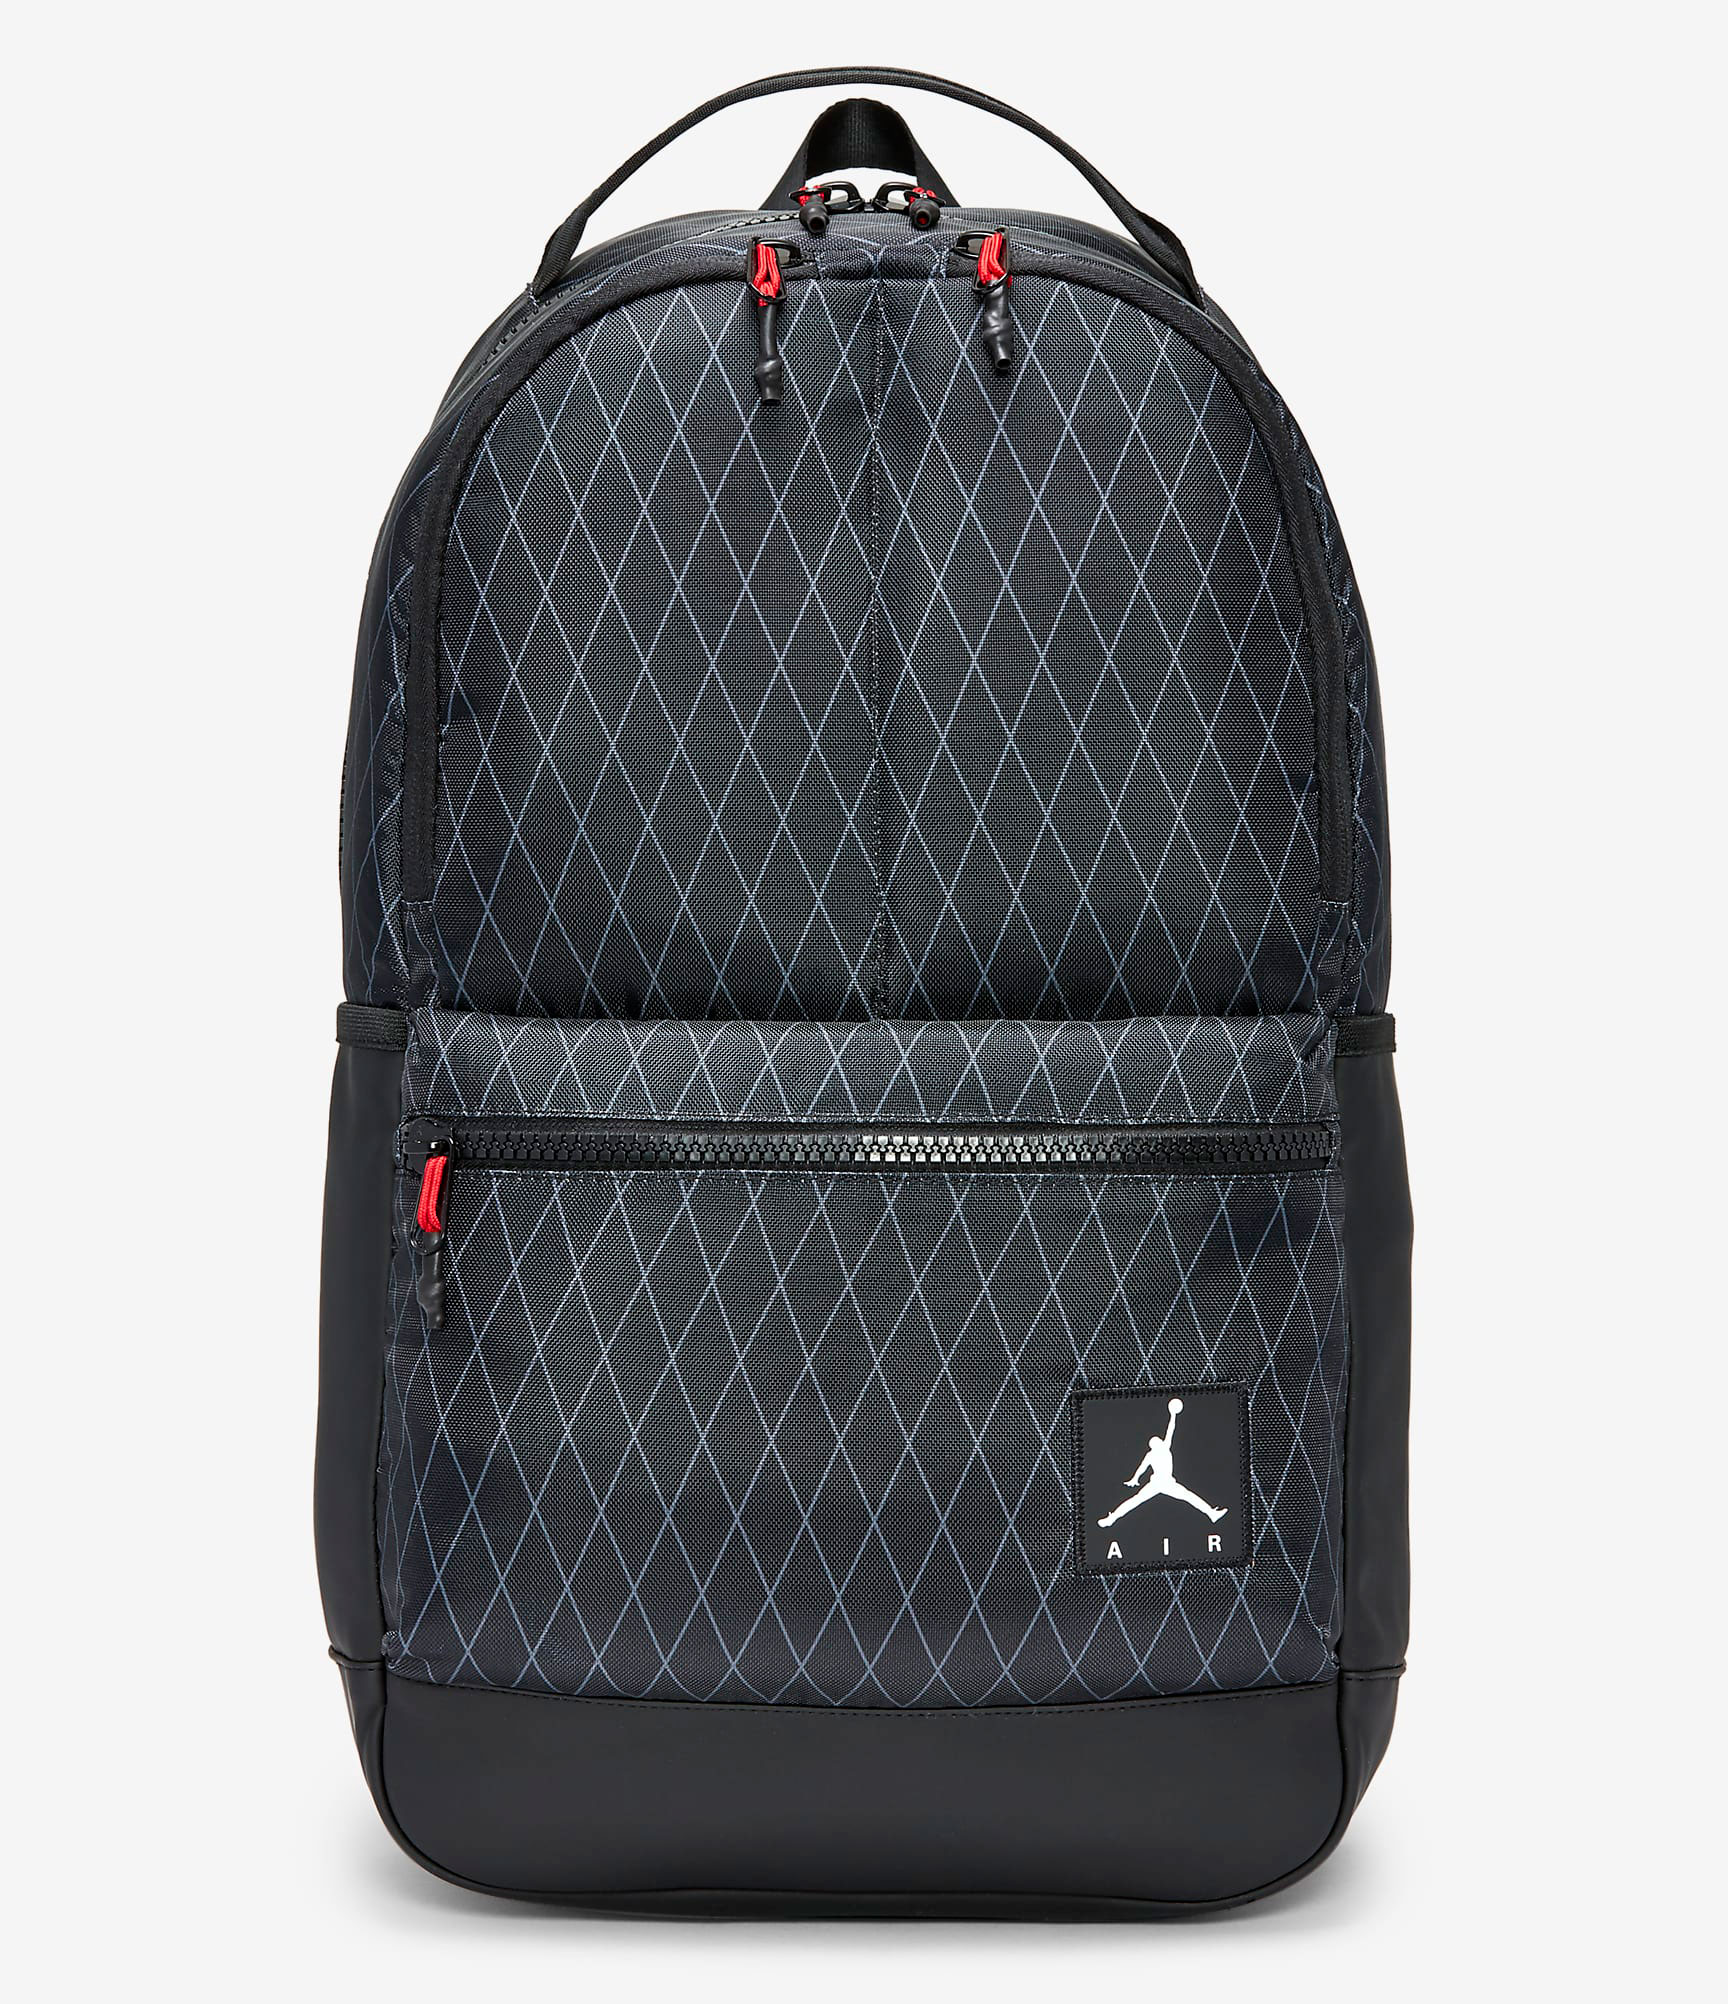 jordan-backpack-fall-2020-black-grey